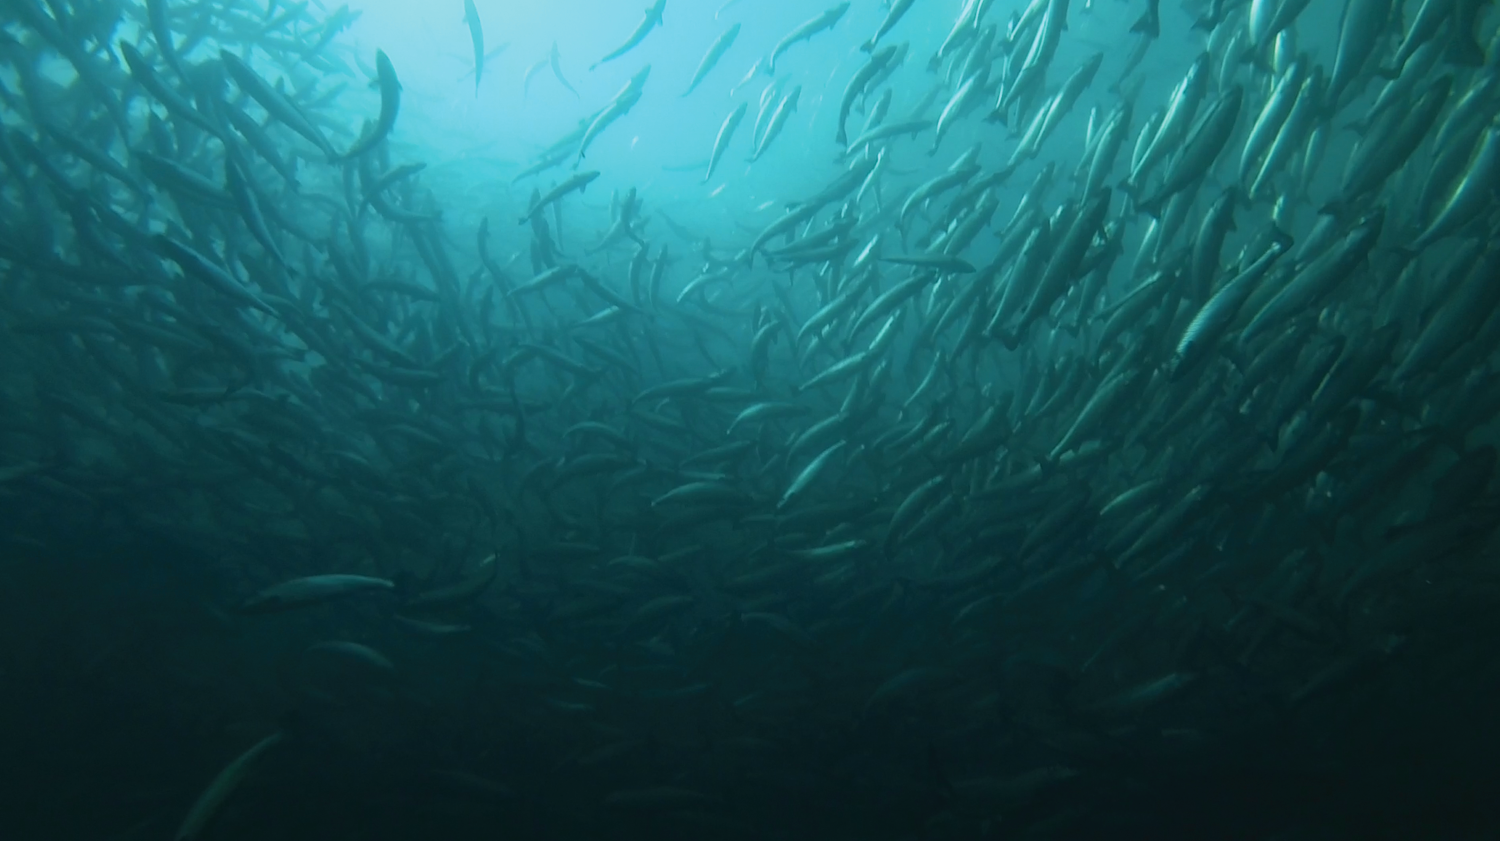 An underwater shot of salmon schooling